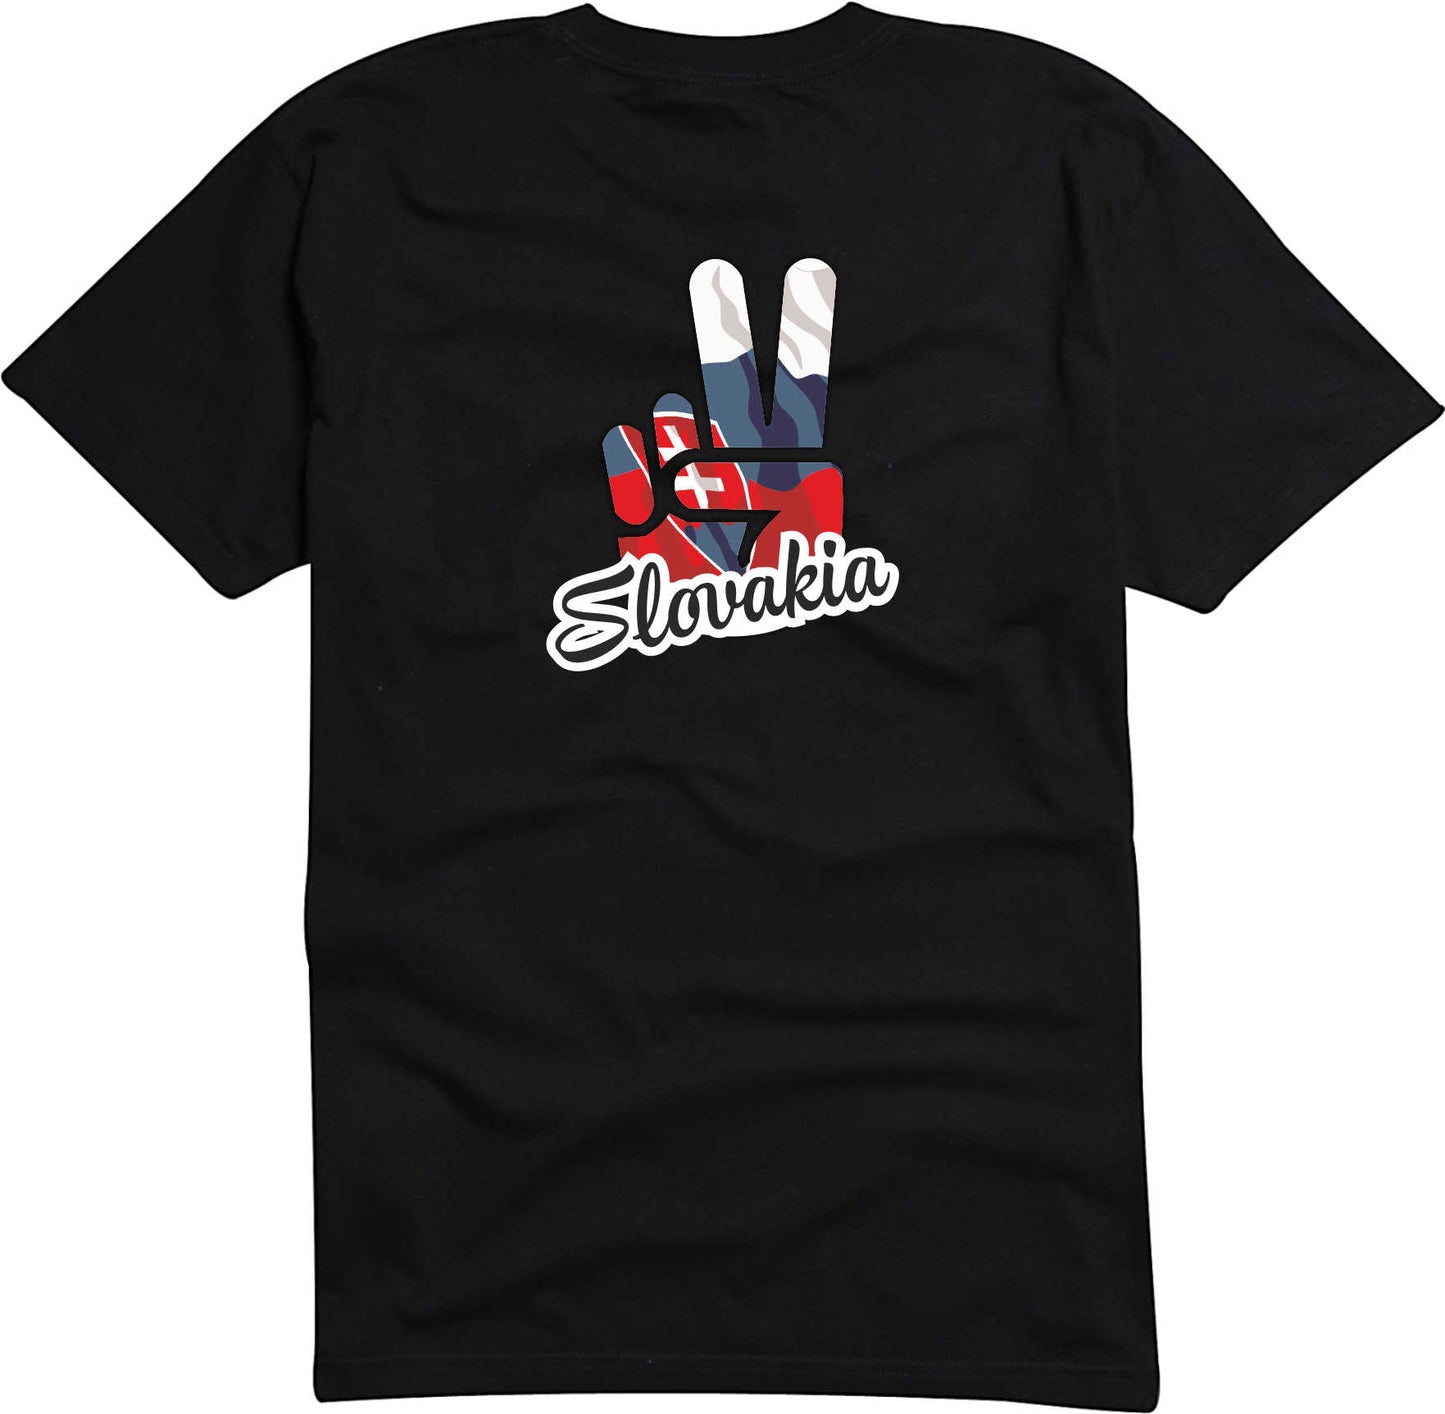 T-Shirt Herren - Victory - Flagge / Fahne - Slovakia - Sieg